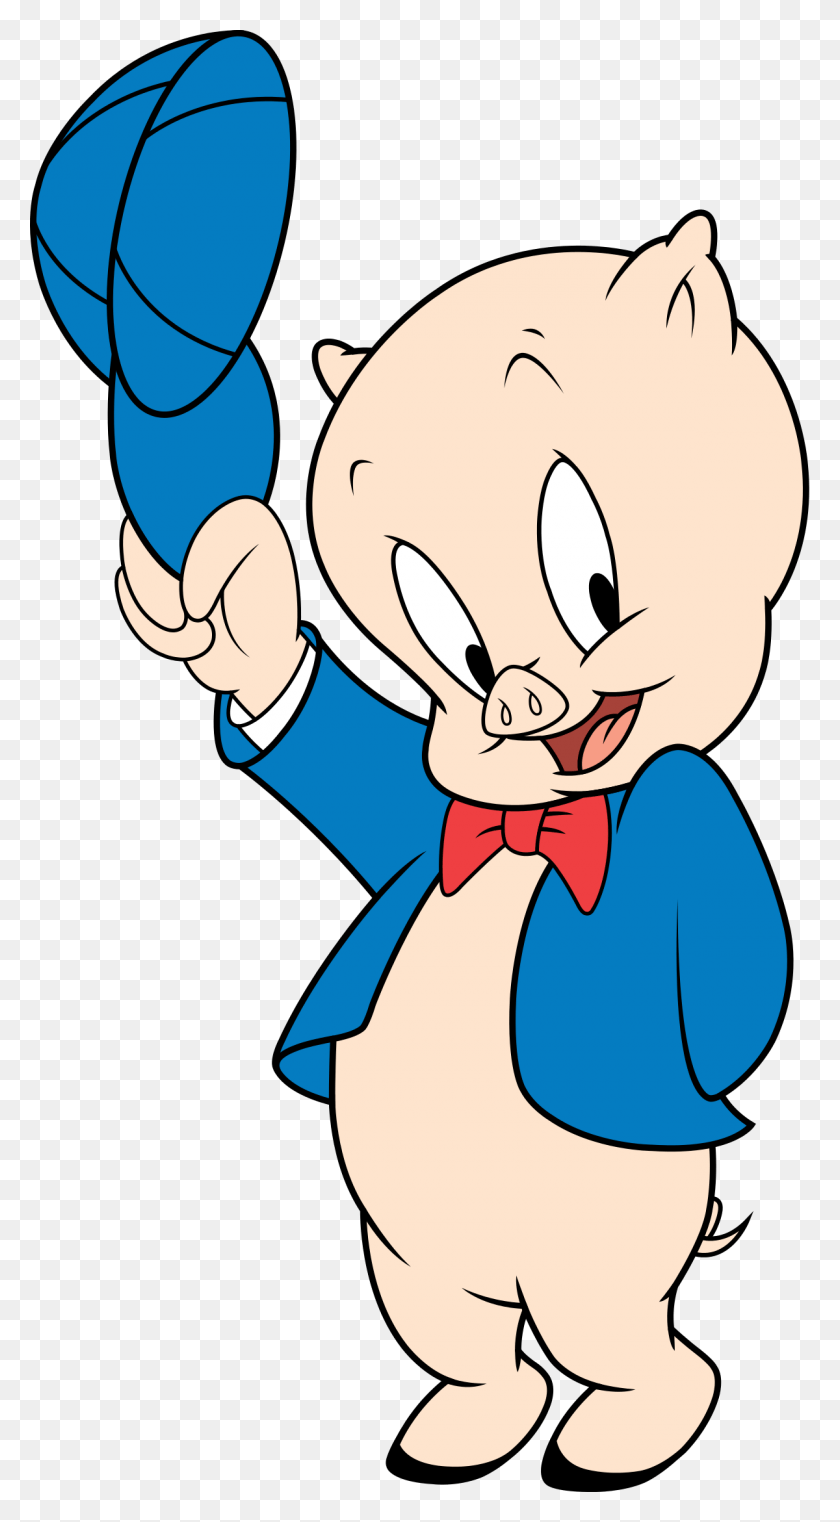 1200x2250 Descargar Png Tamaño Completo De Cómo Dibujar La Cara De Peppa Pig Do You Make Porky Pig, Hand, Graphics Hd Png